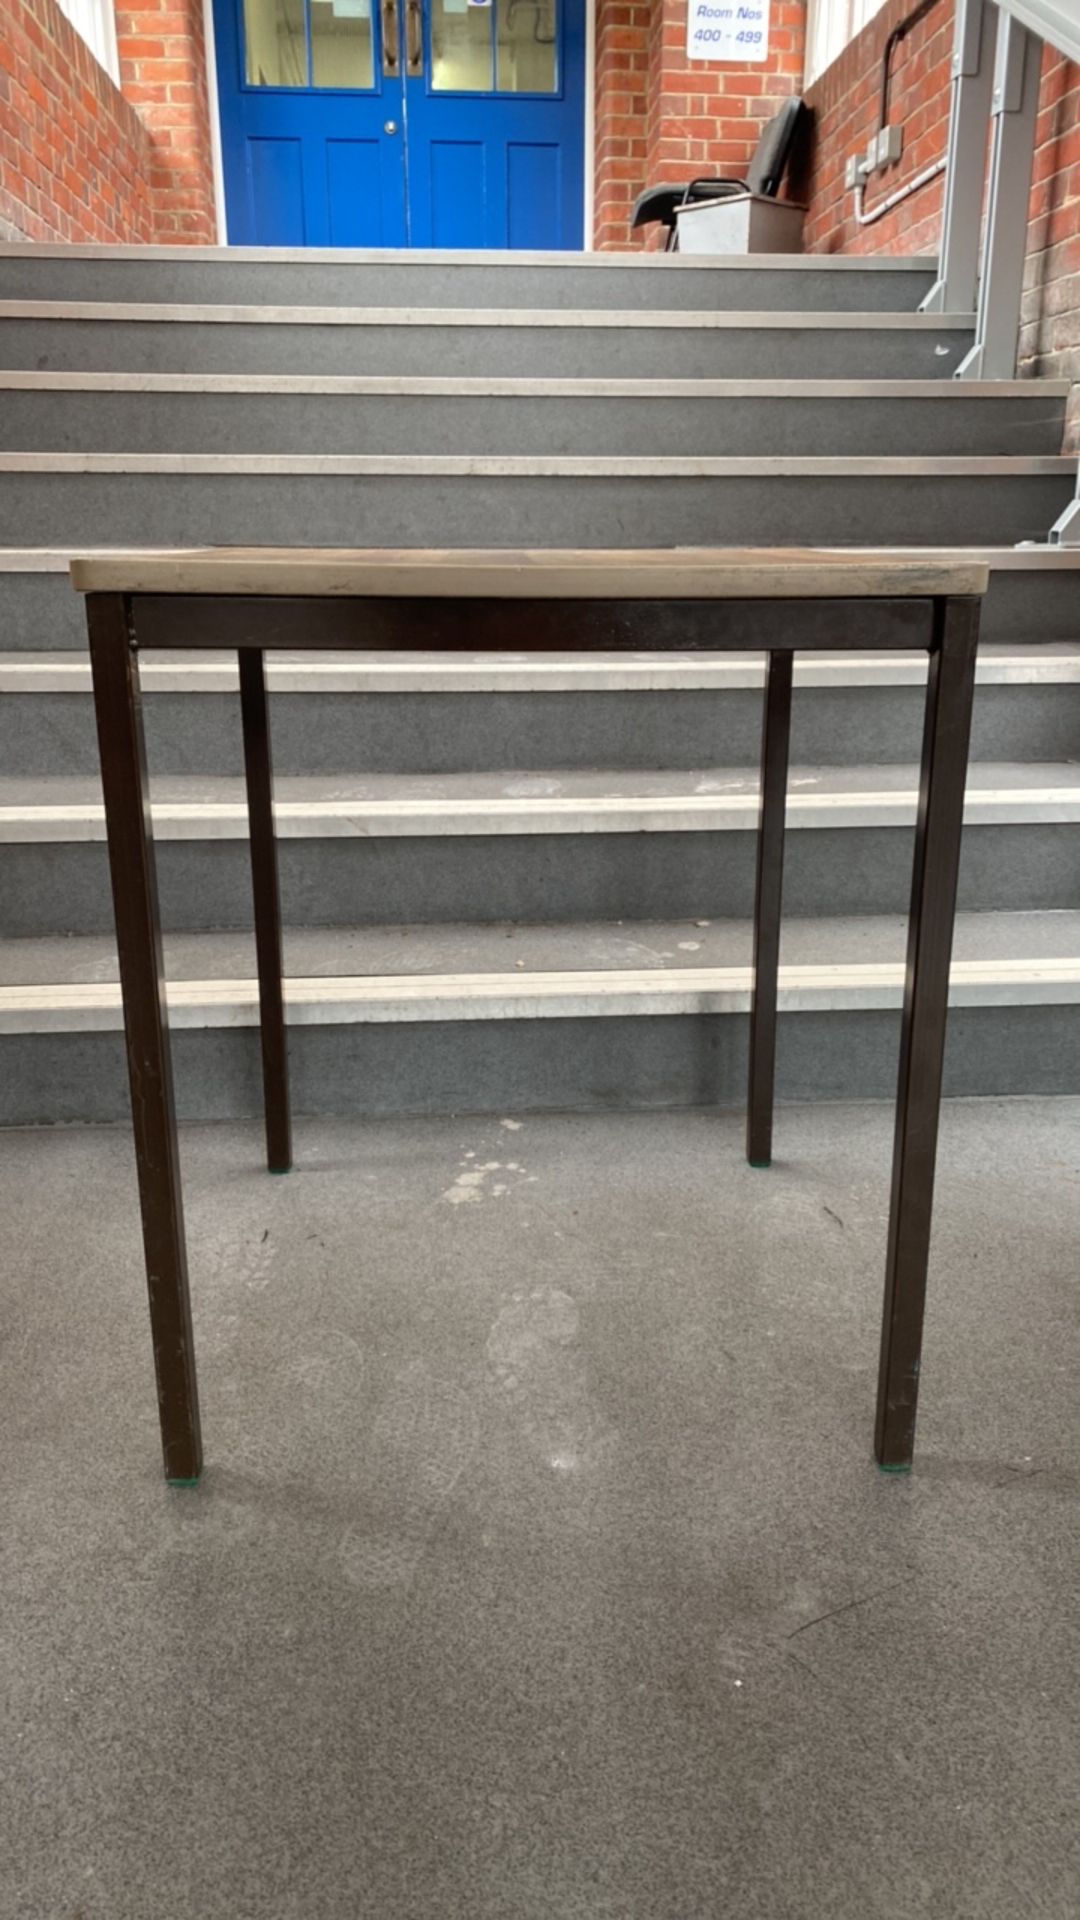 Set of 4 Brown Metal Framed Exam Tables (Grey Edge) - Image 5 of 6